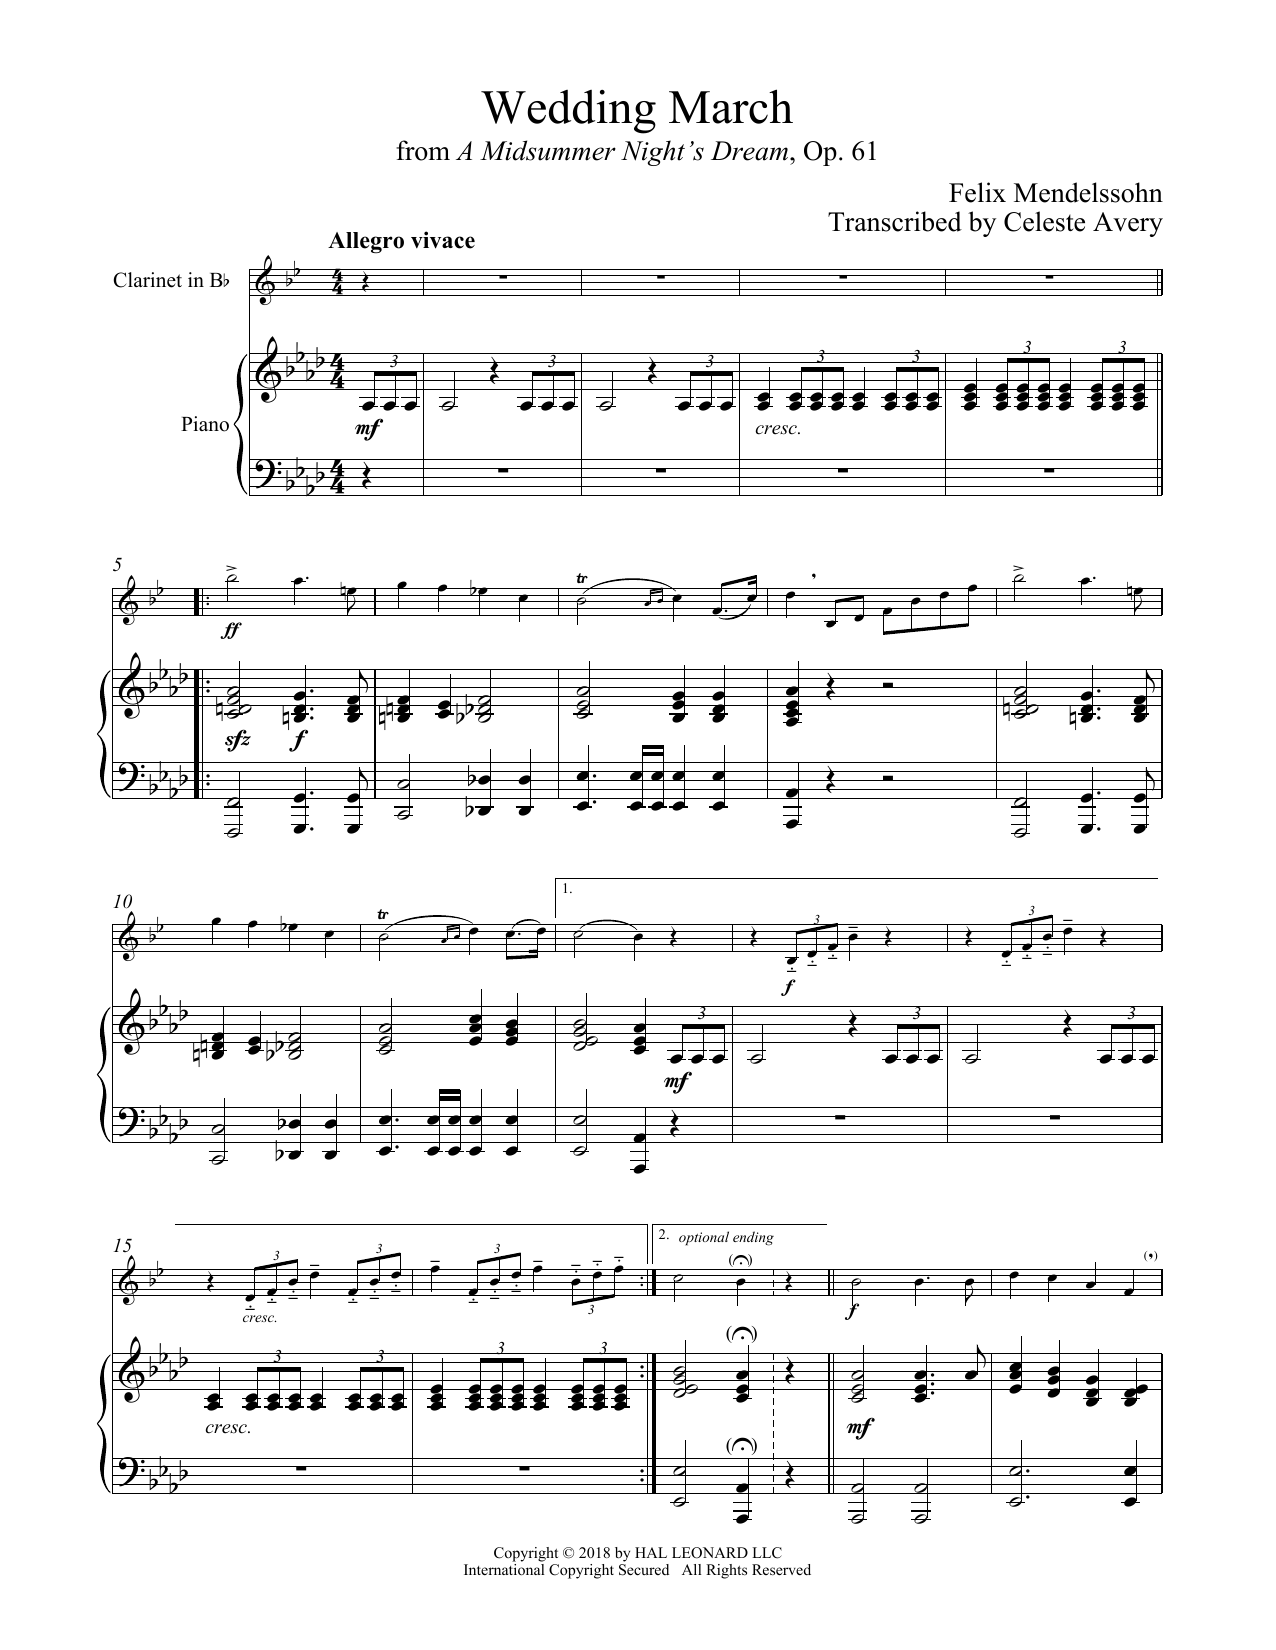 Download Felix Mendelssohn Wedding March Sheet Music